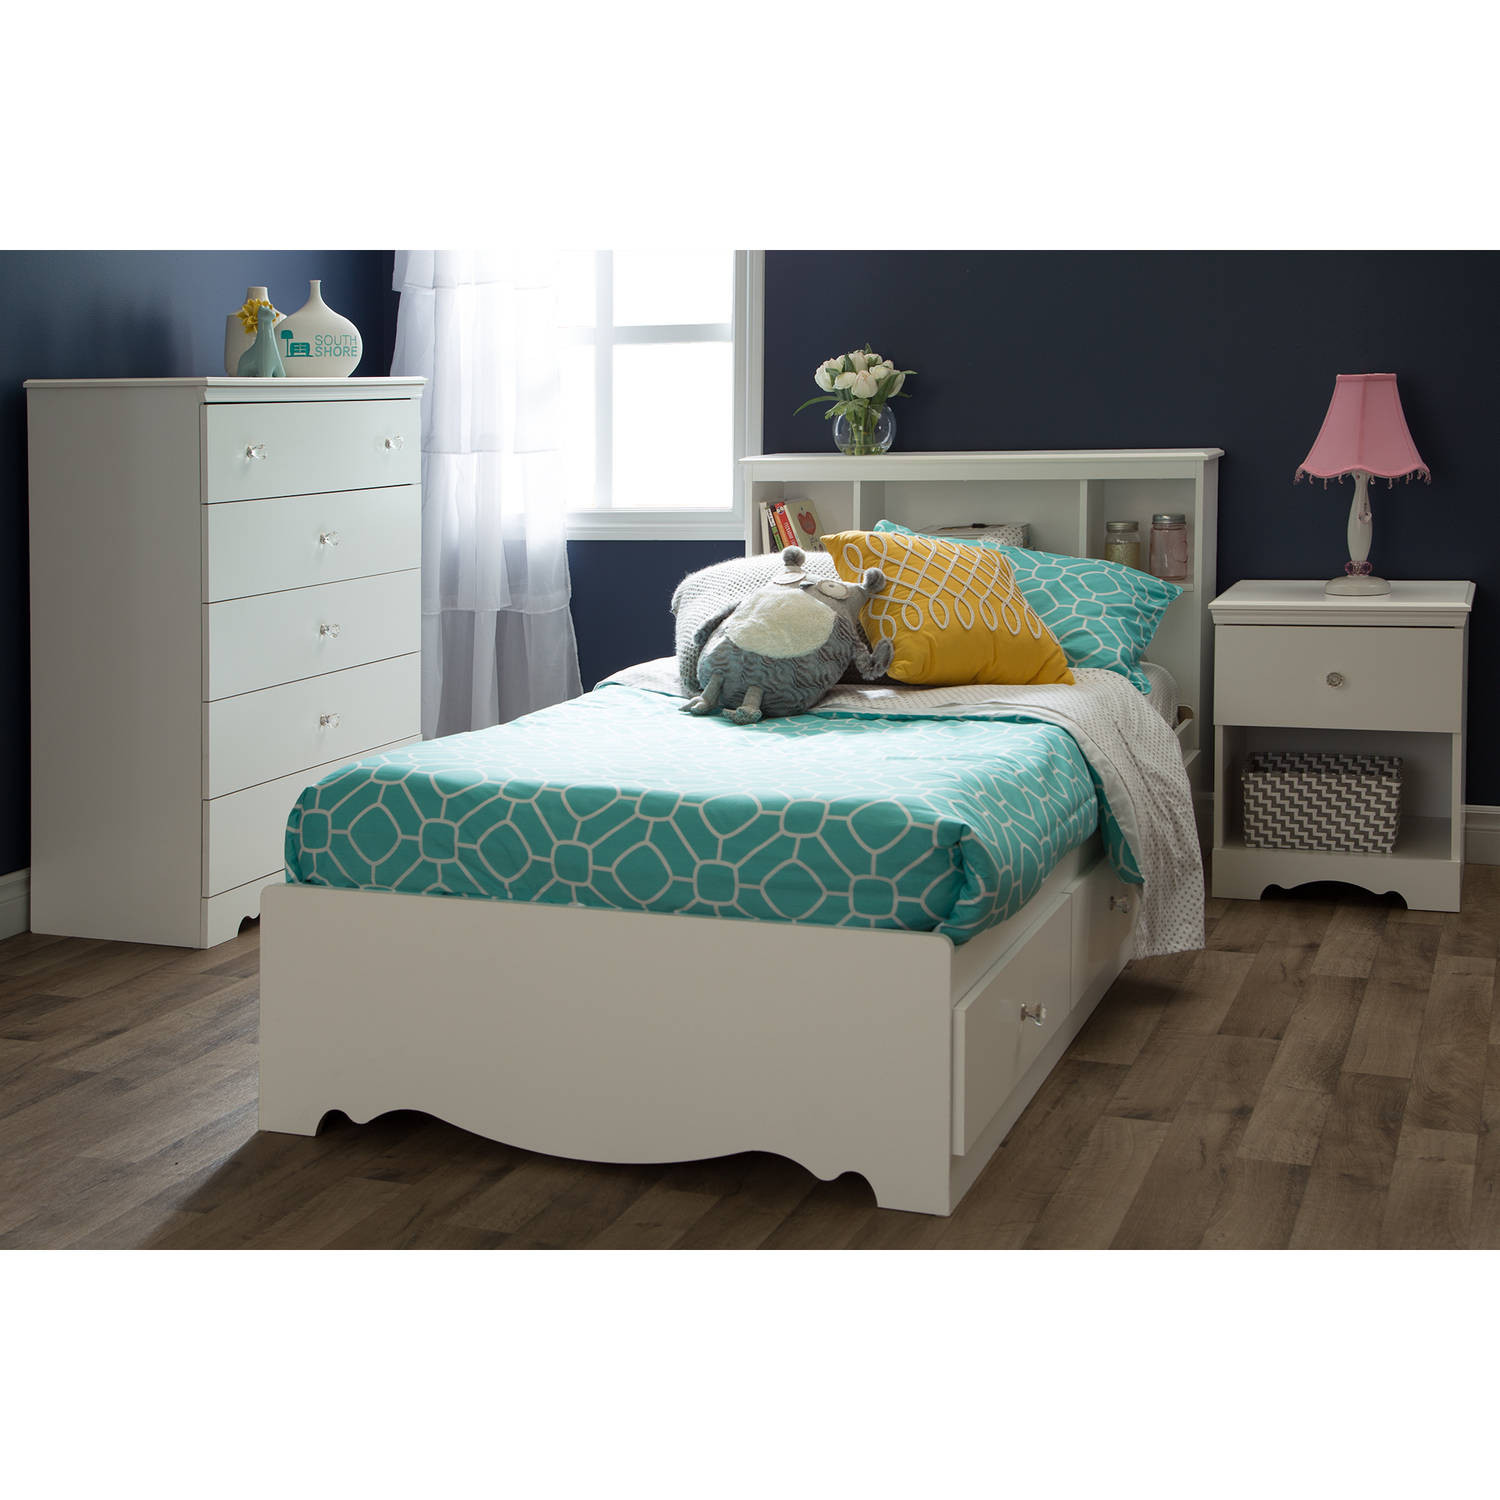 Walmart Kids Bedroom
 South Shore Crystal Kids Bedroom Furniture Collection